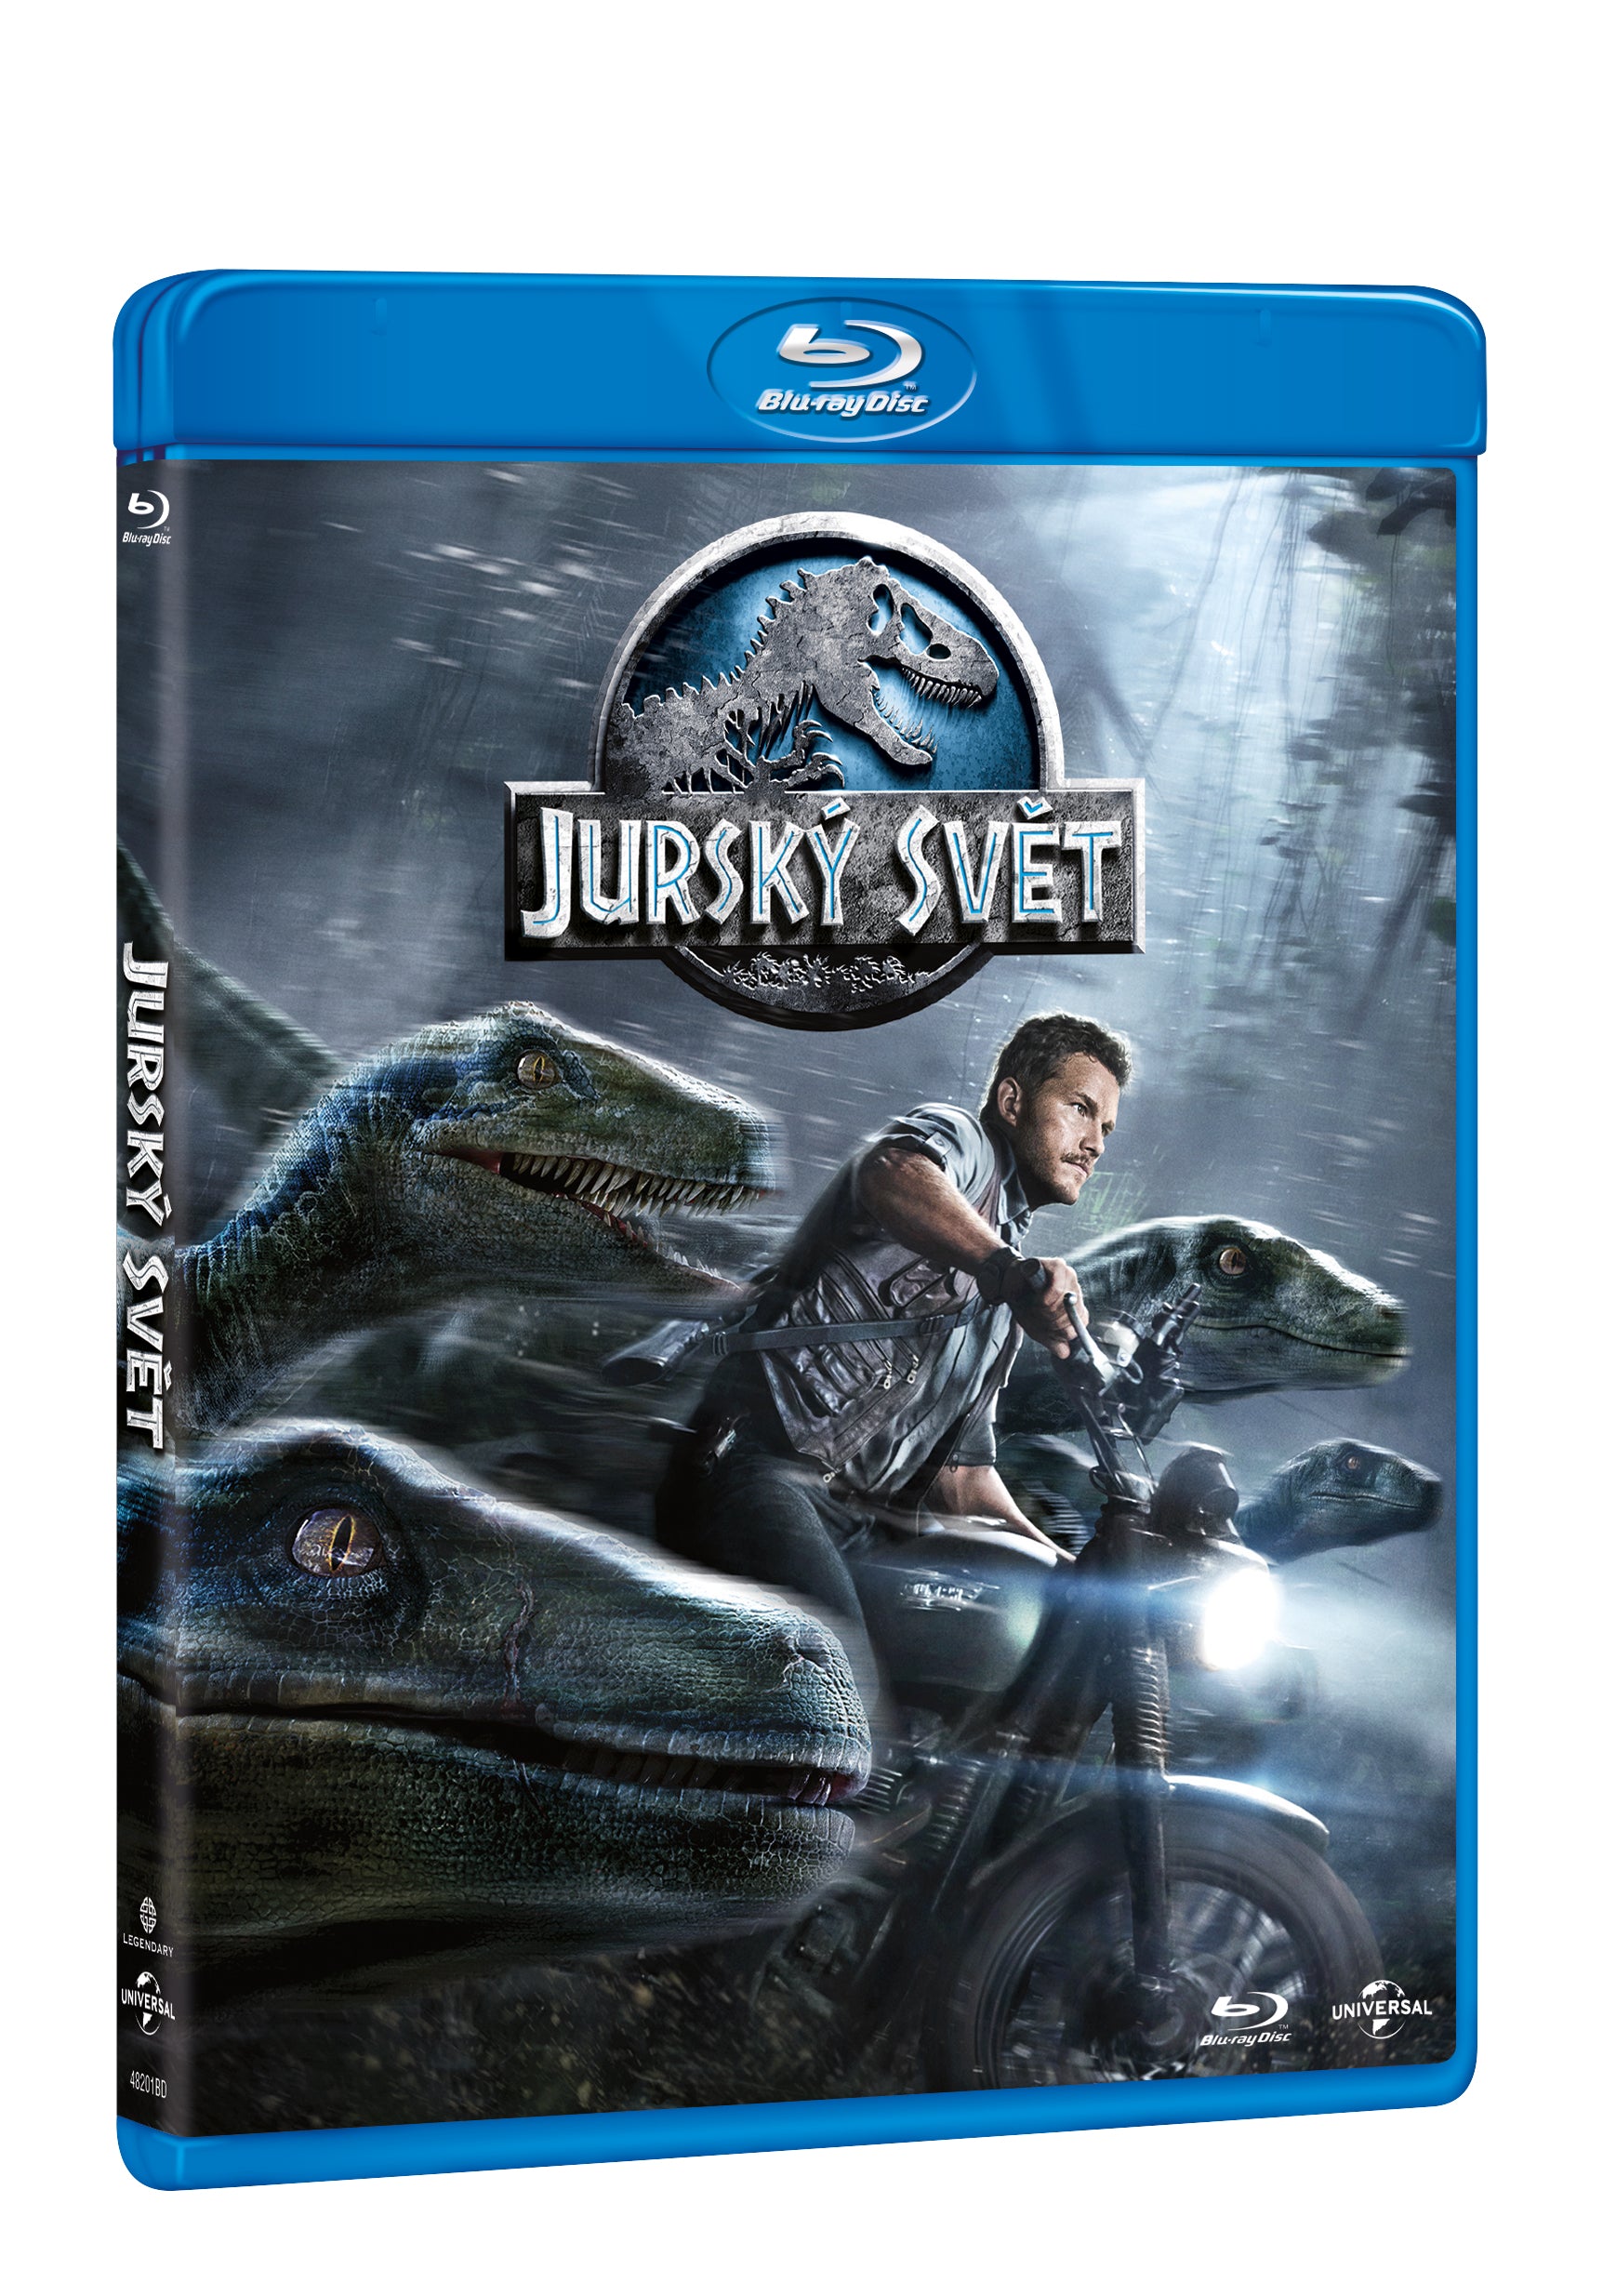 Jursky svet BD / Jurassic World - Czech version